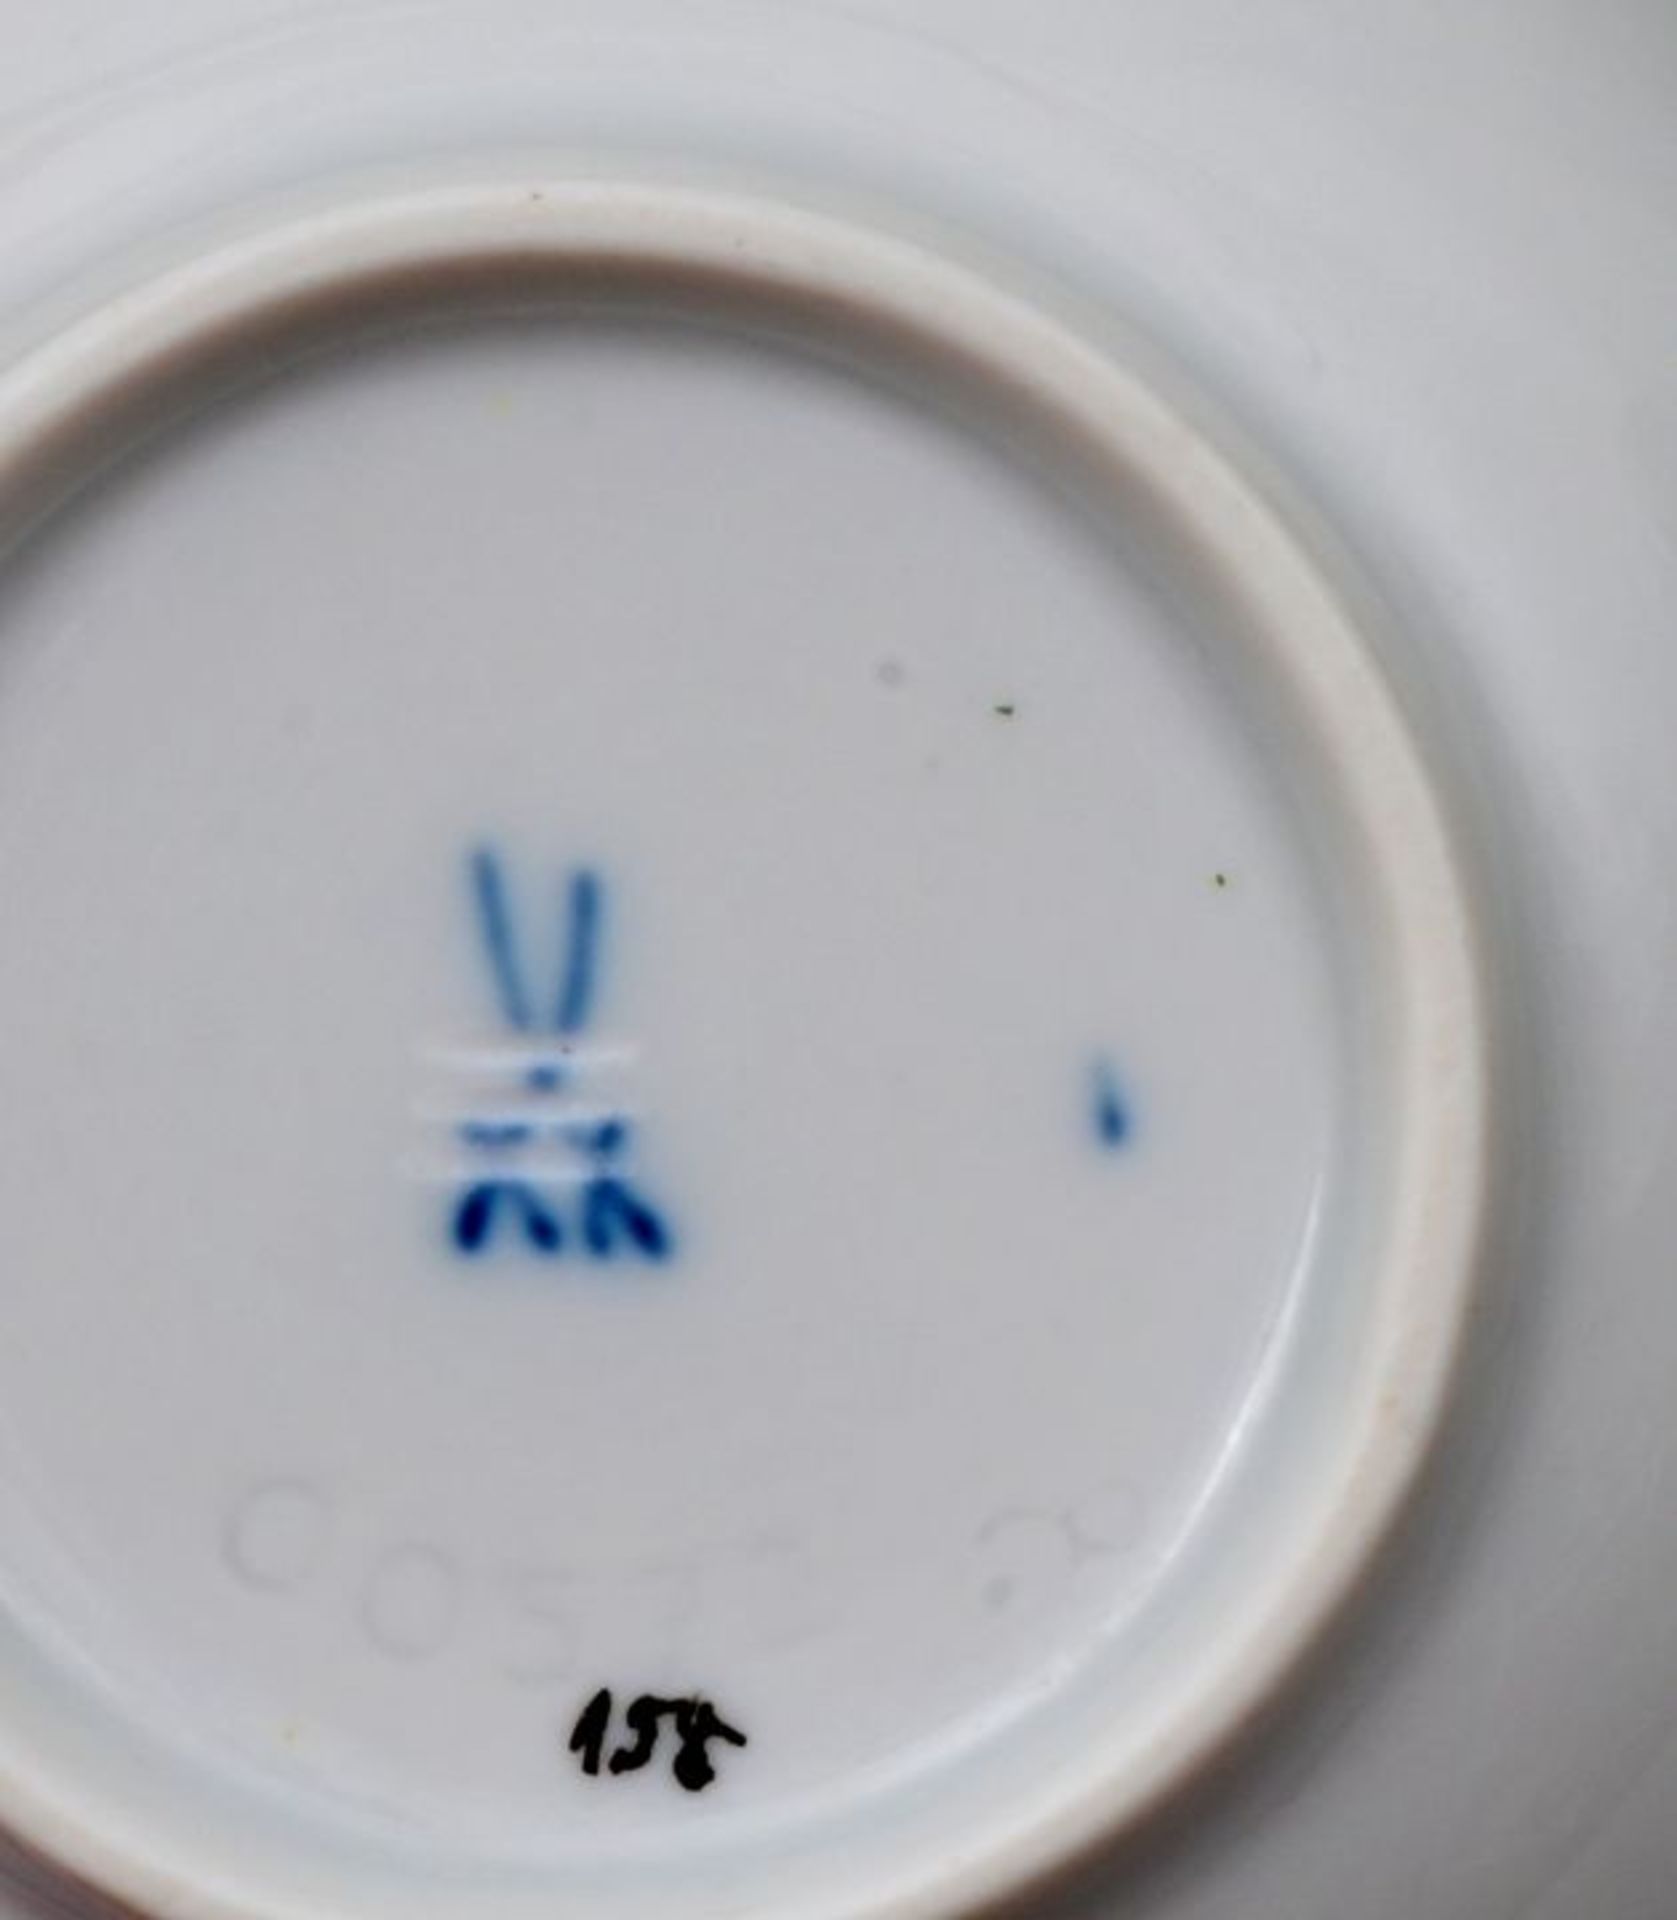 Sechs Tassen + UTA, Meissen / Six cups with saucers, Meissen - Image 2 of 3